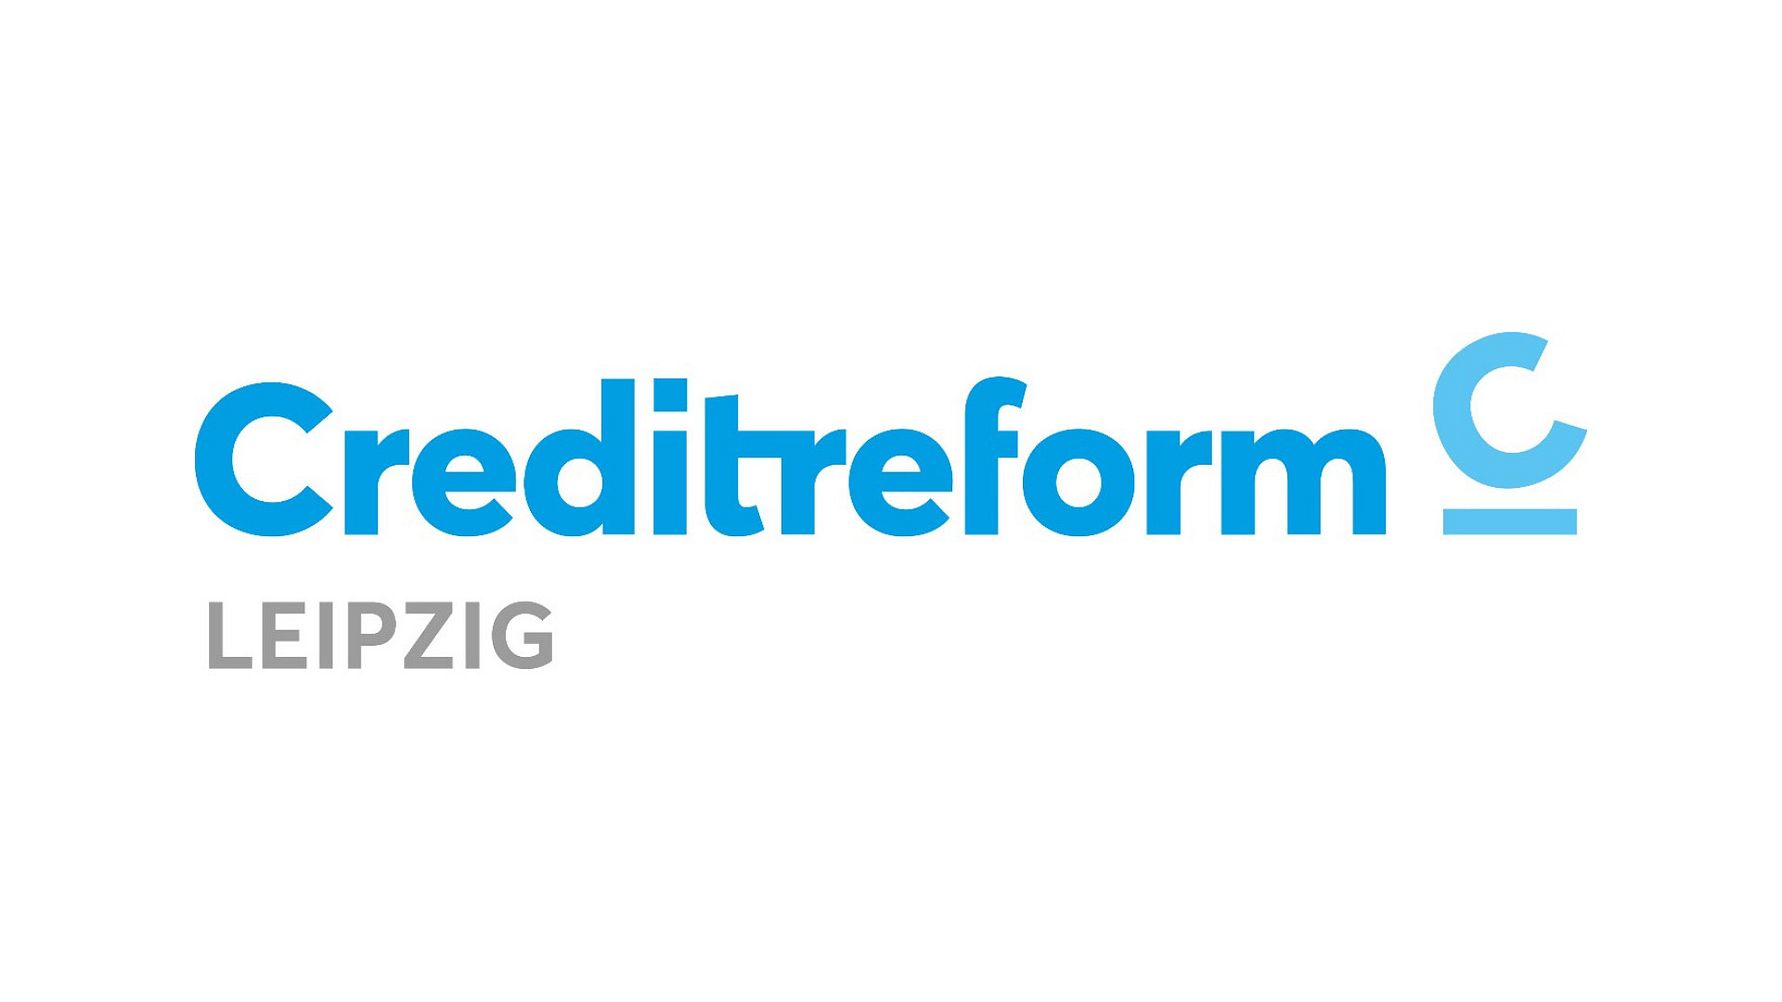 symbolbild procilon news - Creditreform Leipzig optimiert Geschäftsprozesse mit proTECTr eBO Outlook Add-in